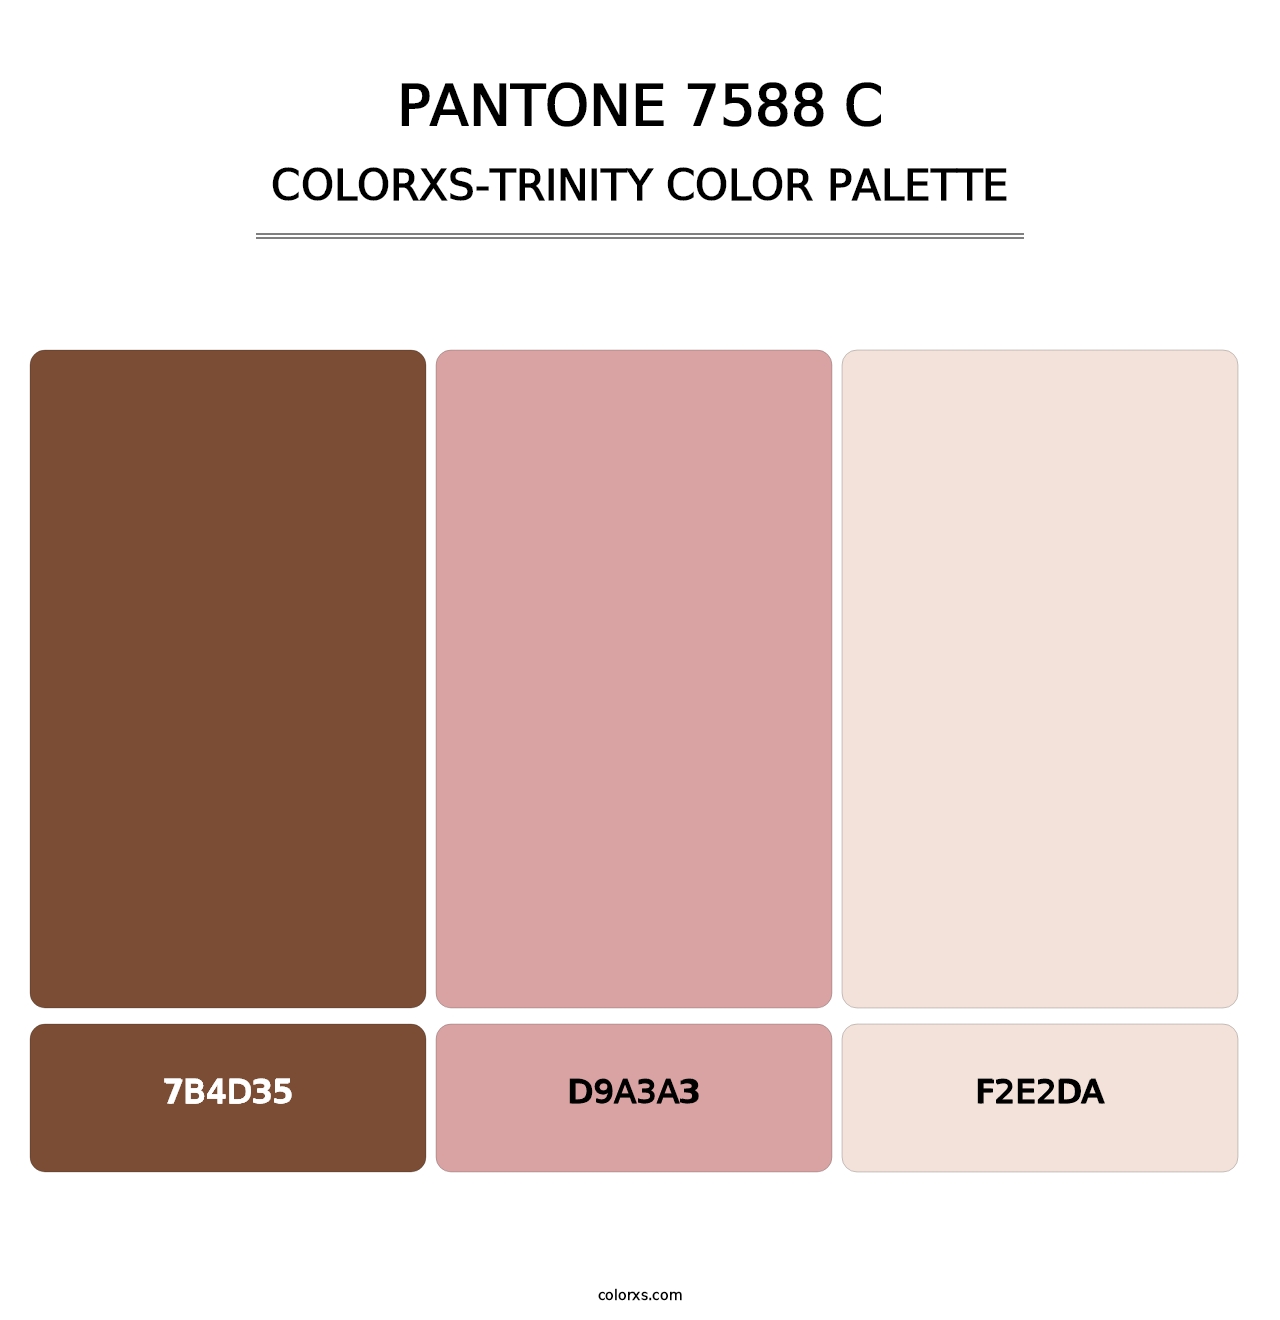 PANTONE 7588 C - Colorxs Trinity Palette